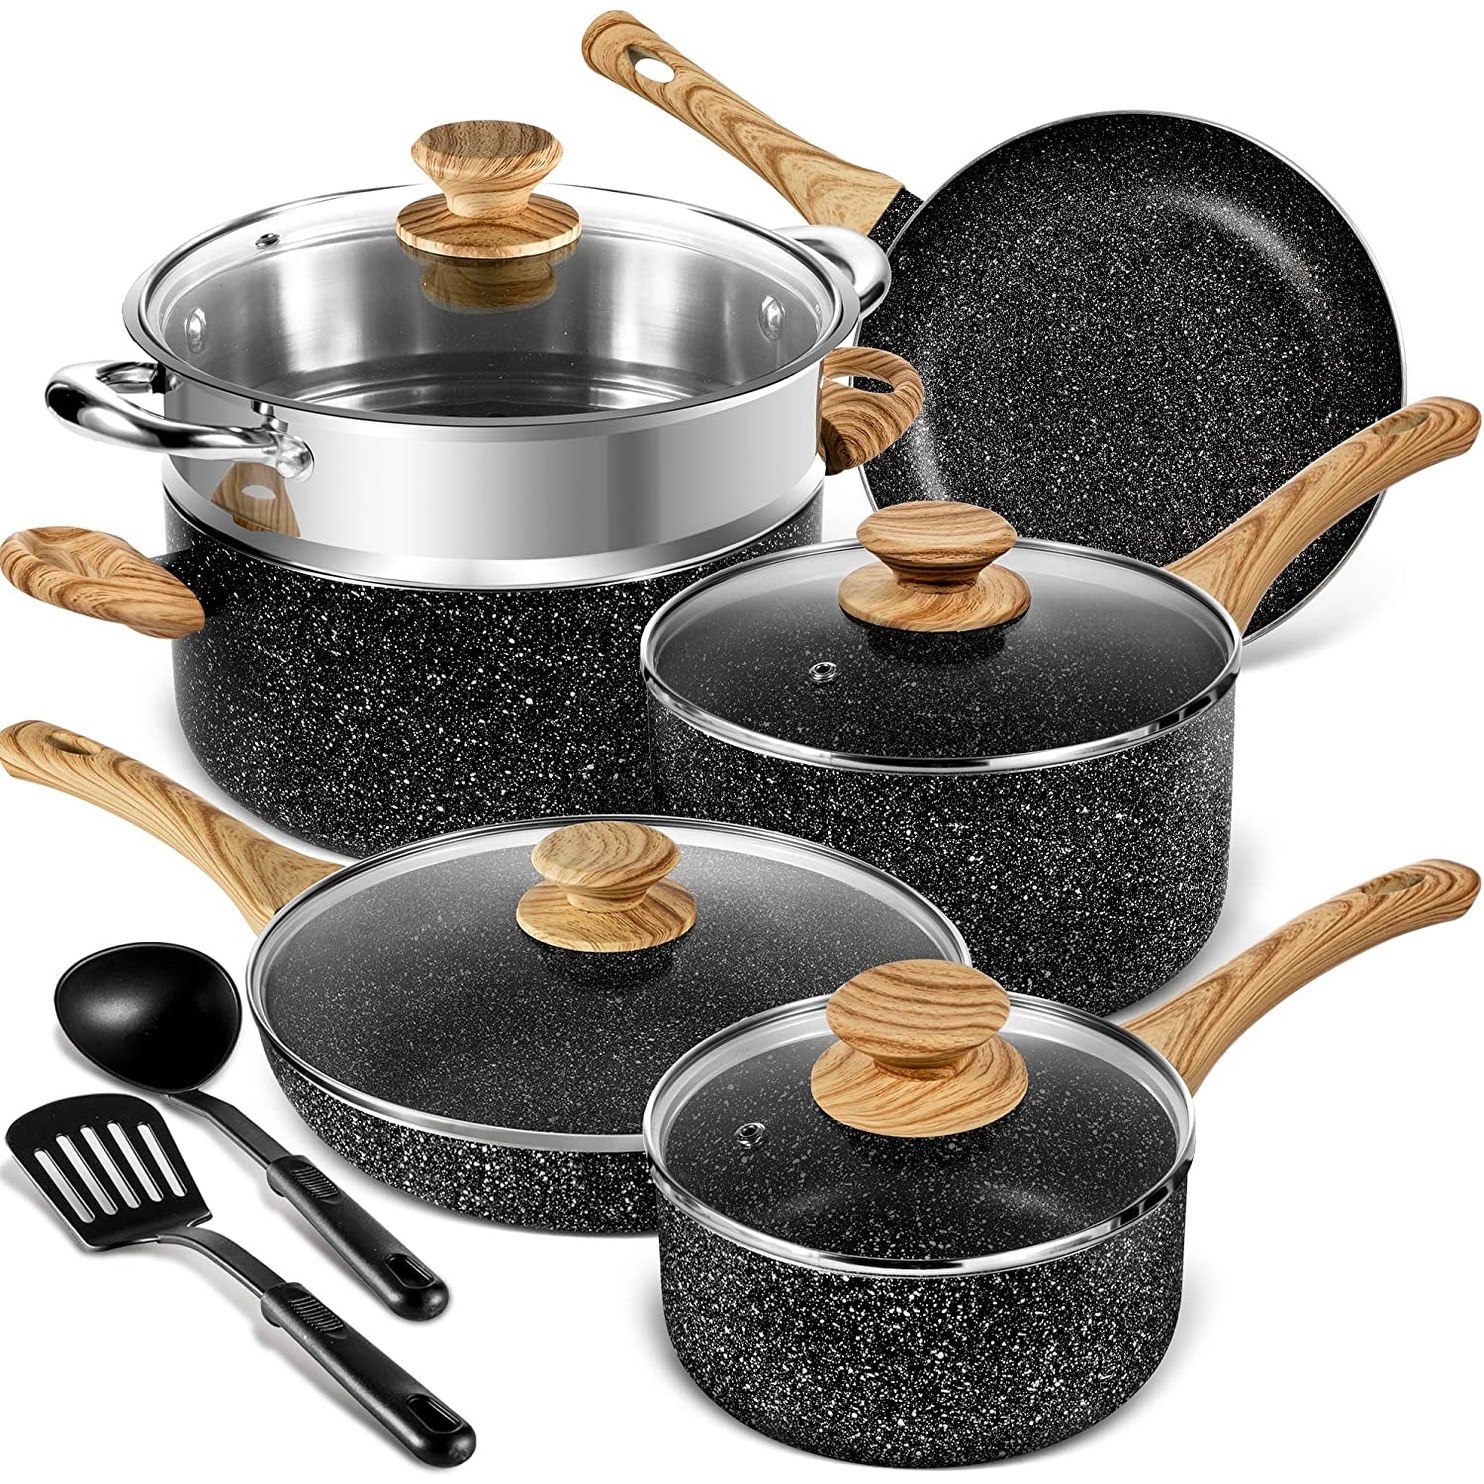 https://ak1.ostkcdn.com/images/products/is/images/direct/43c9c8316e48bb968785778a3bb8d4945bc78920/White-Pots-and-Pans-Set-Nonstick-Cookware-Sets%2C-12pcs-White-Granite-Cookware-Set-Induction-Compatible.jpg